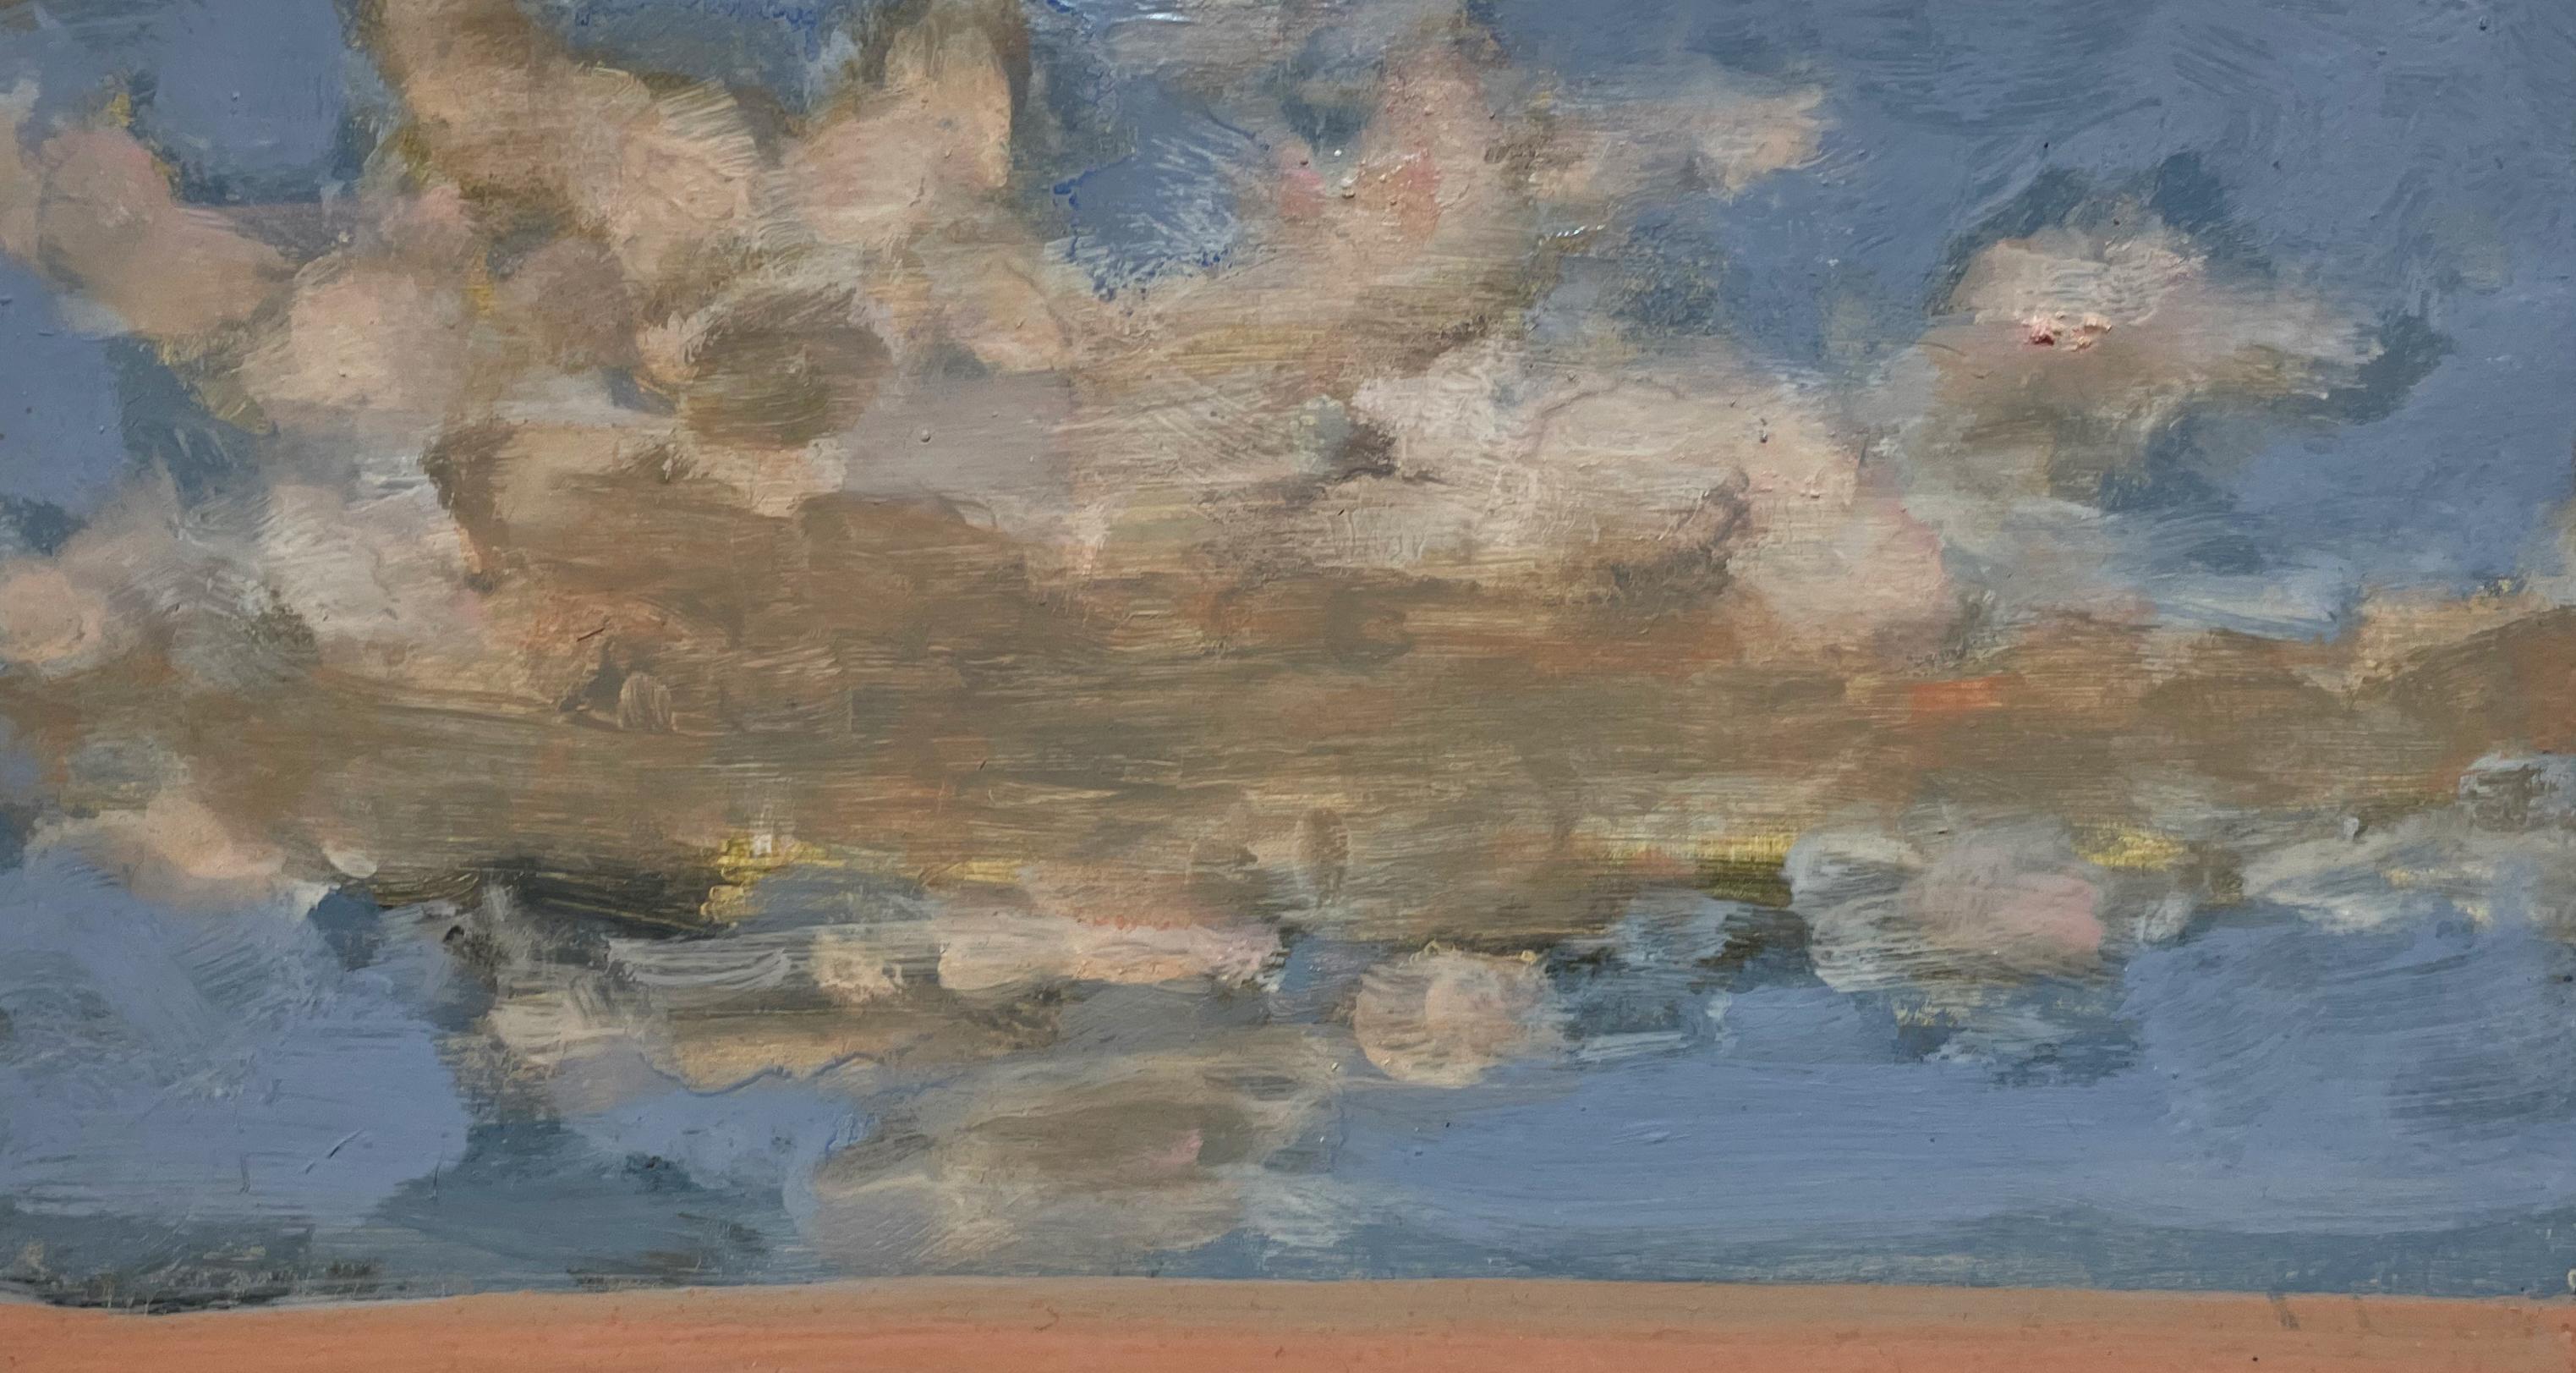 Three Twenty, Ivory Peach Clouds, Blue Sky, Salmon Sand Beach Landscape